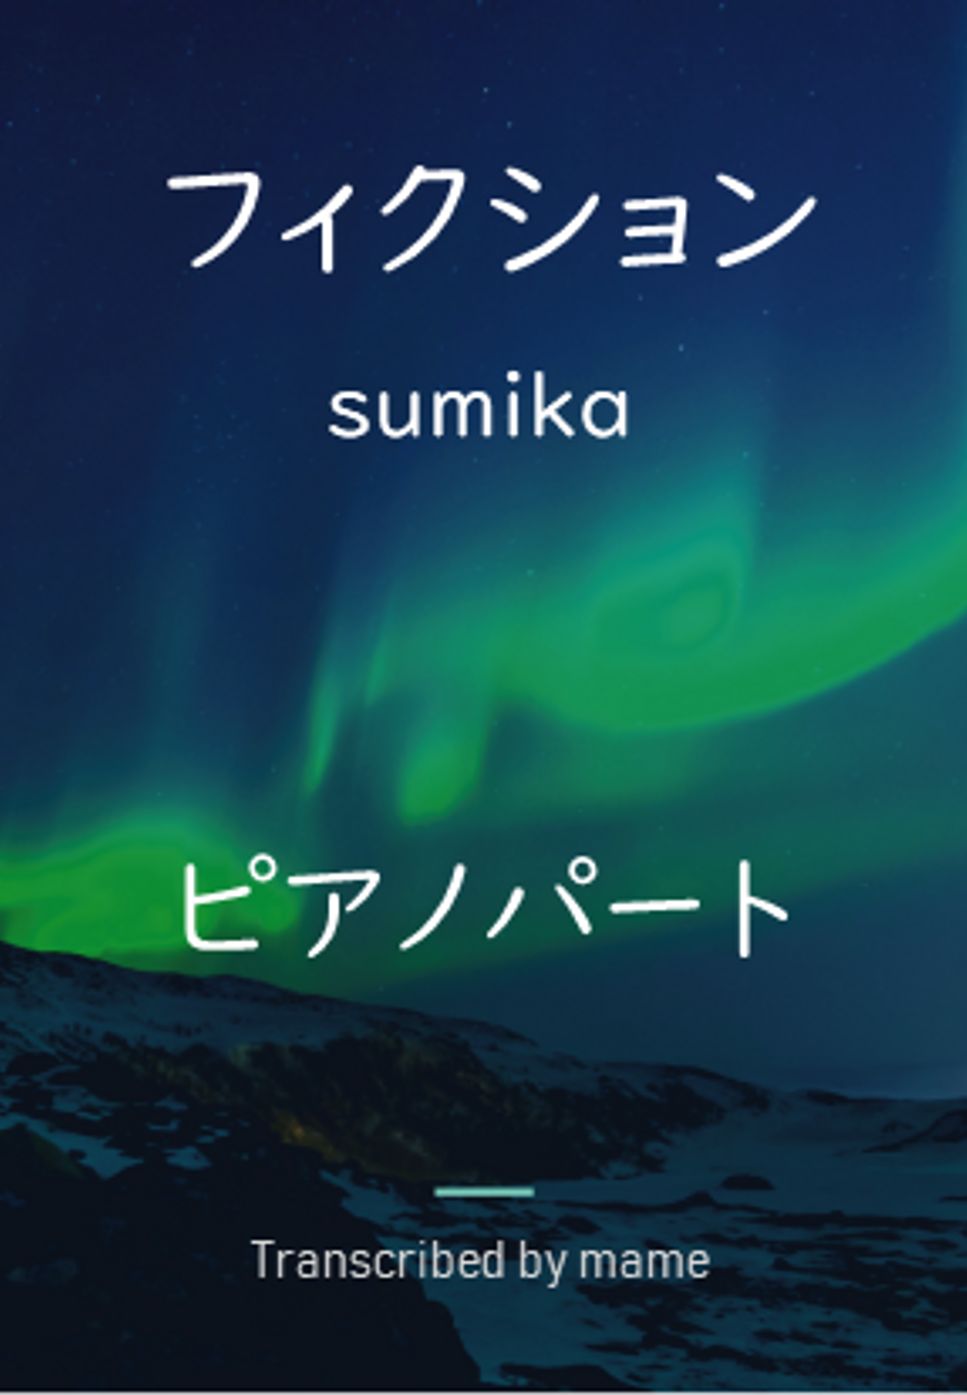 sumika - フィクション (ピアノパート) by mame